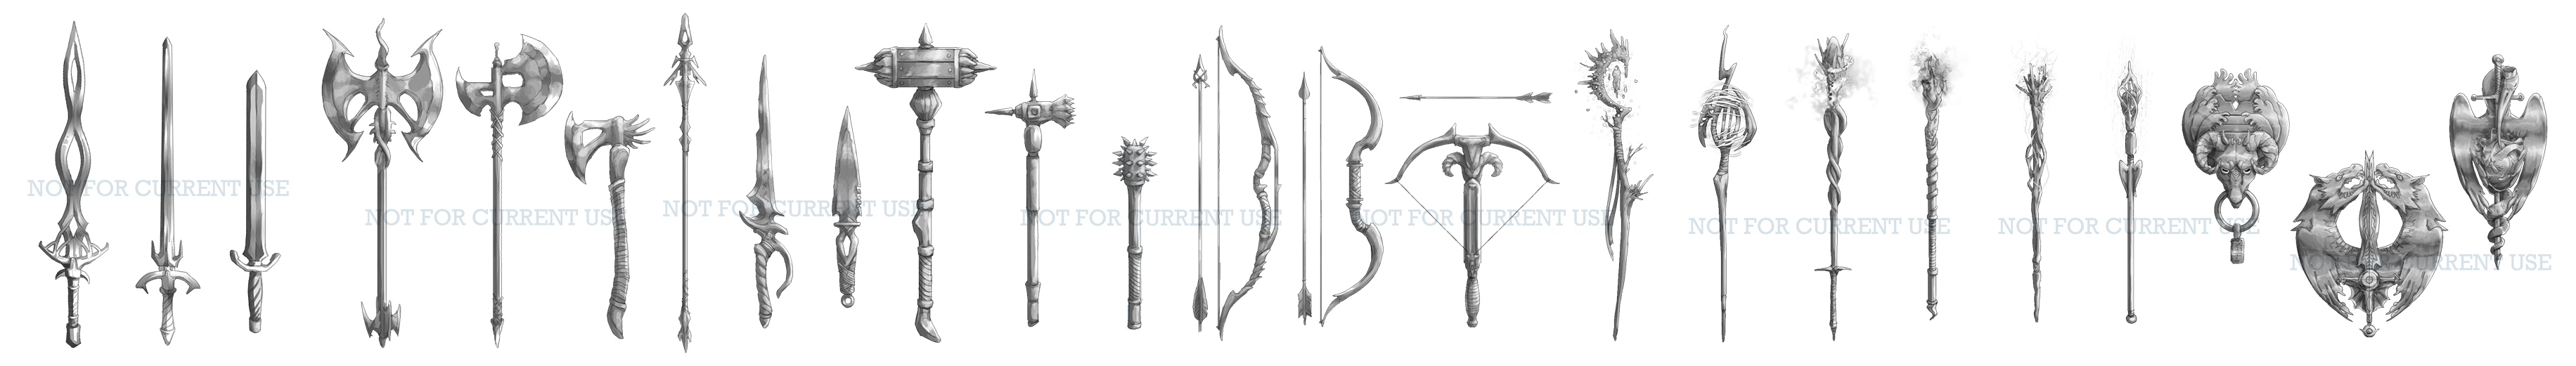 Guild Chronicles weapon item concepts